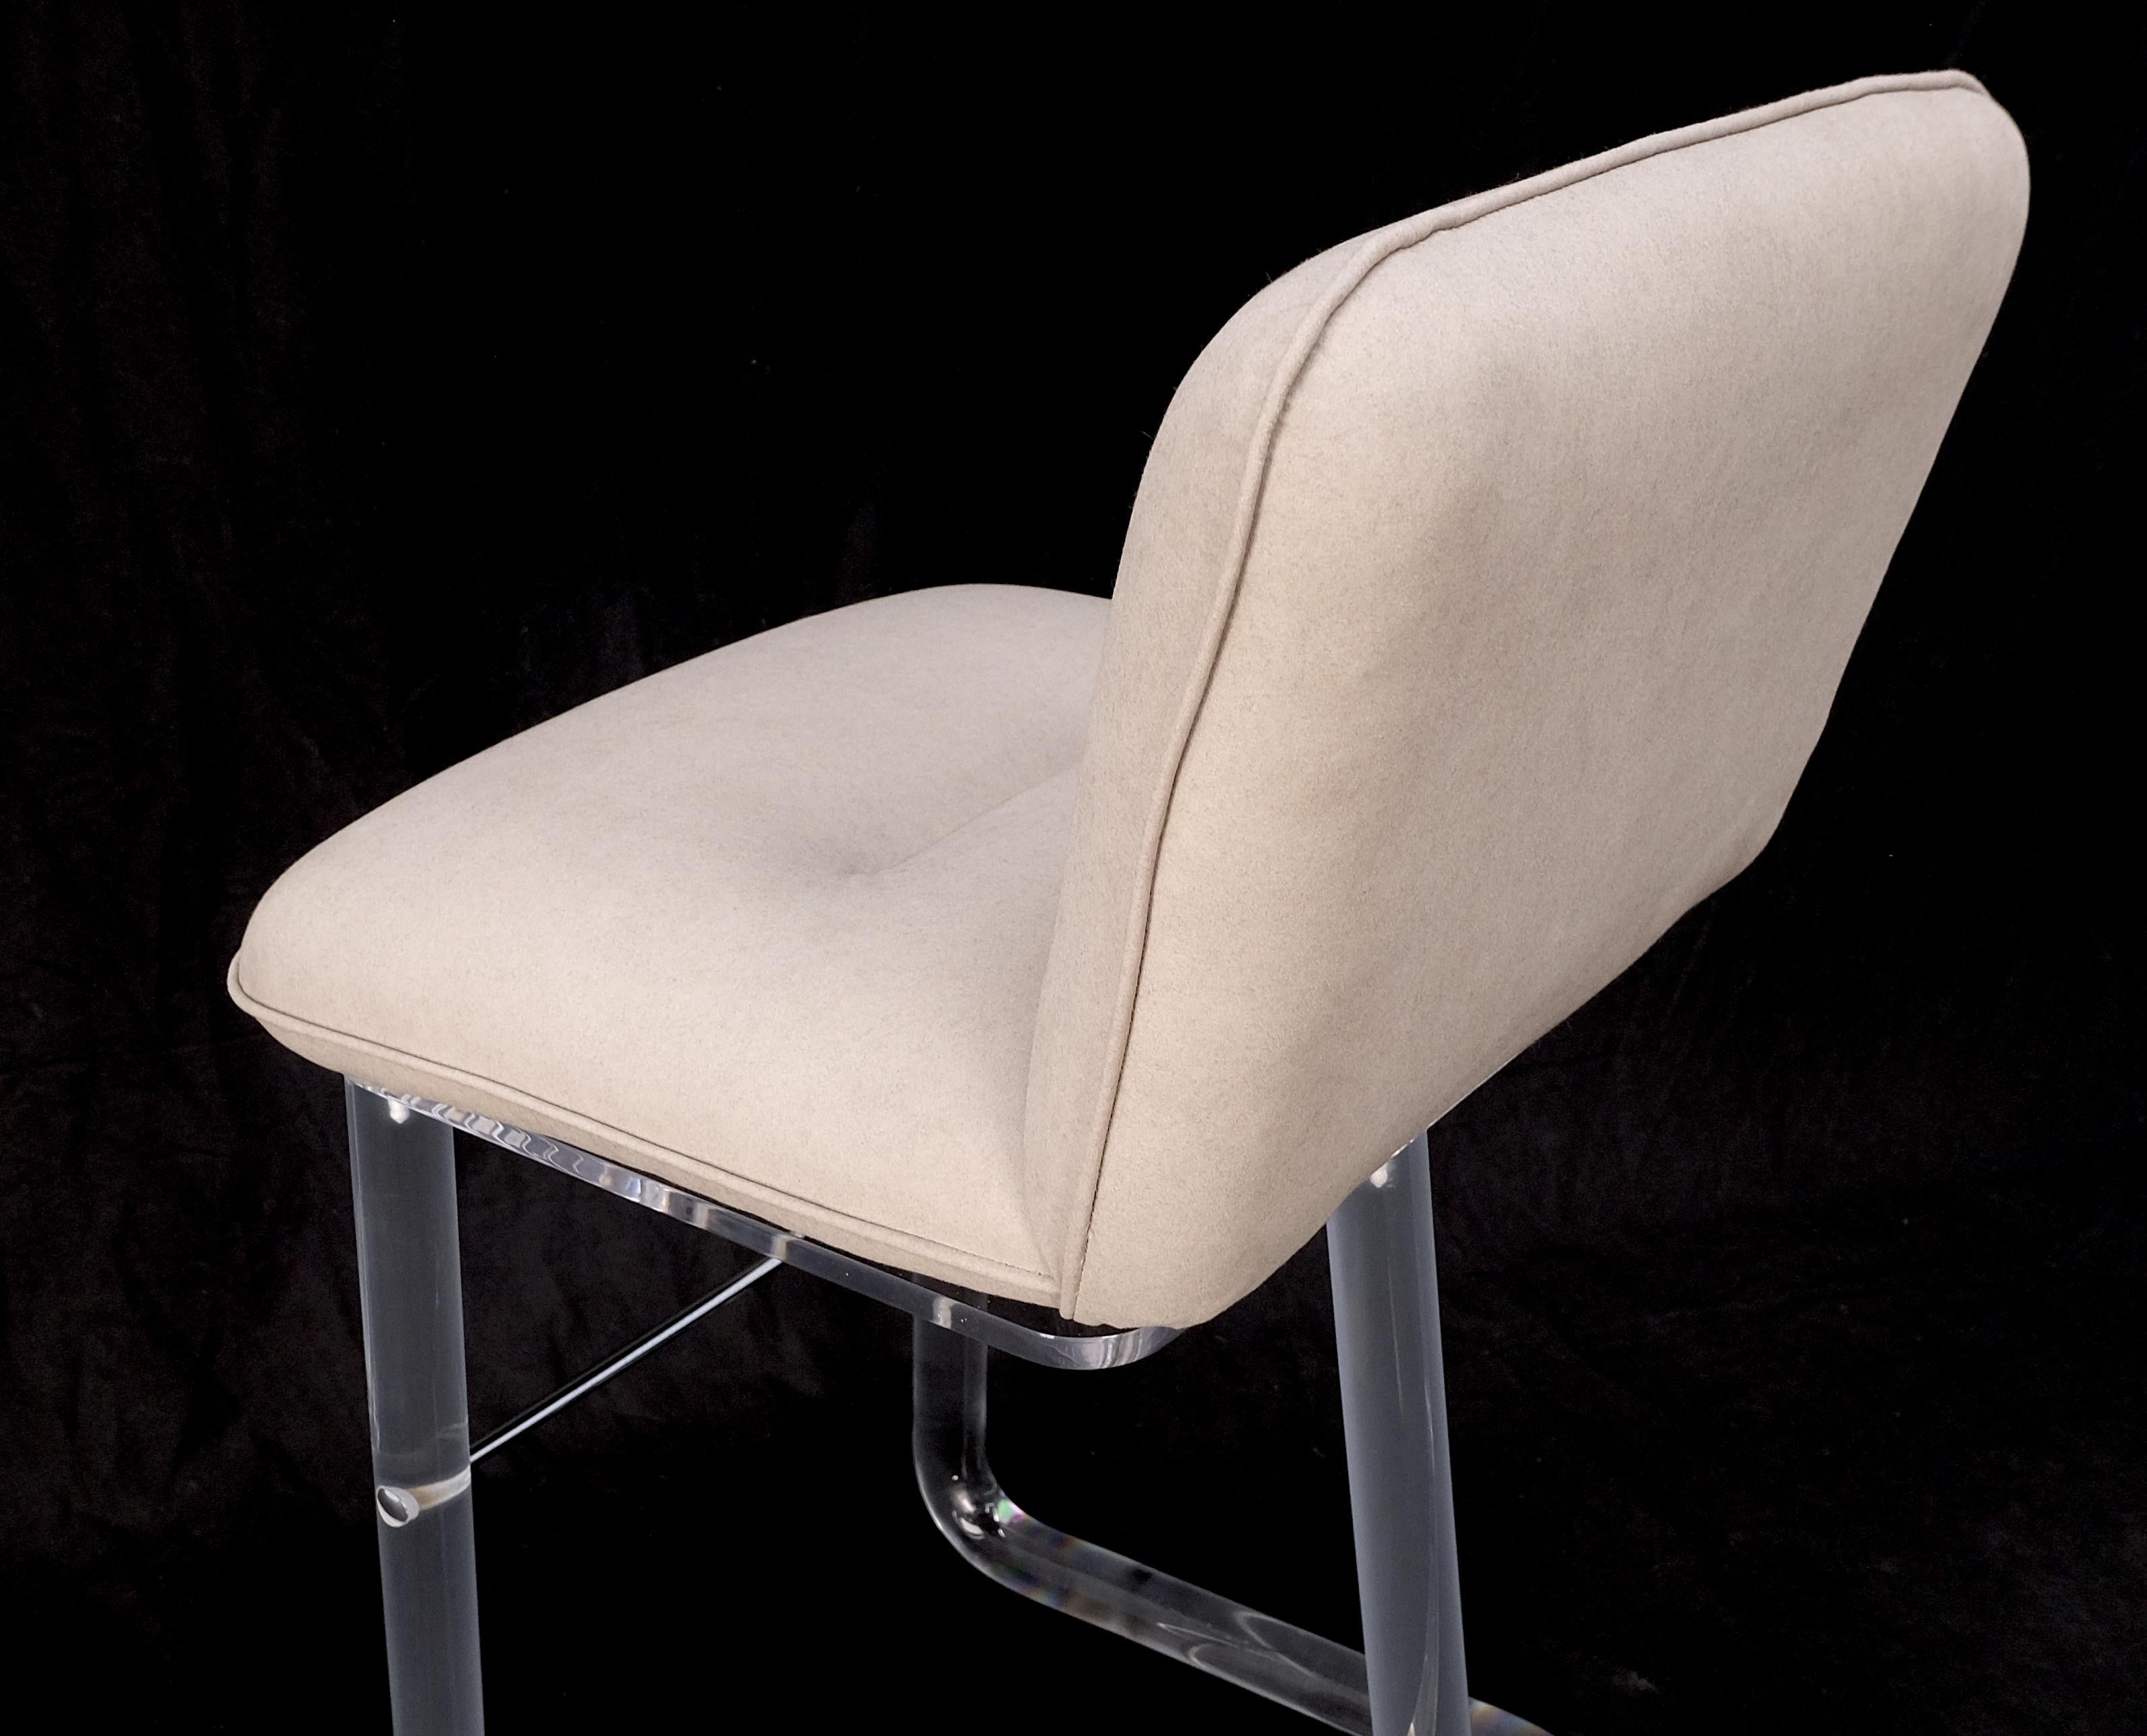 Pair Bent Lucite 1970er New Alcantera Upholstery Swivel Barstool Chairs Stühle Mint!
Vom Künstler signiert.